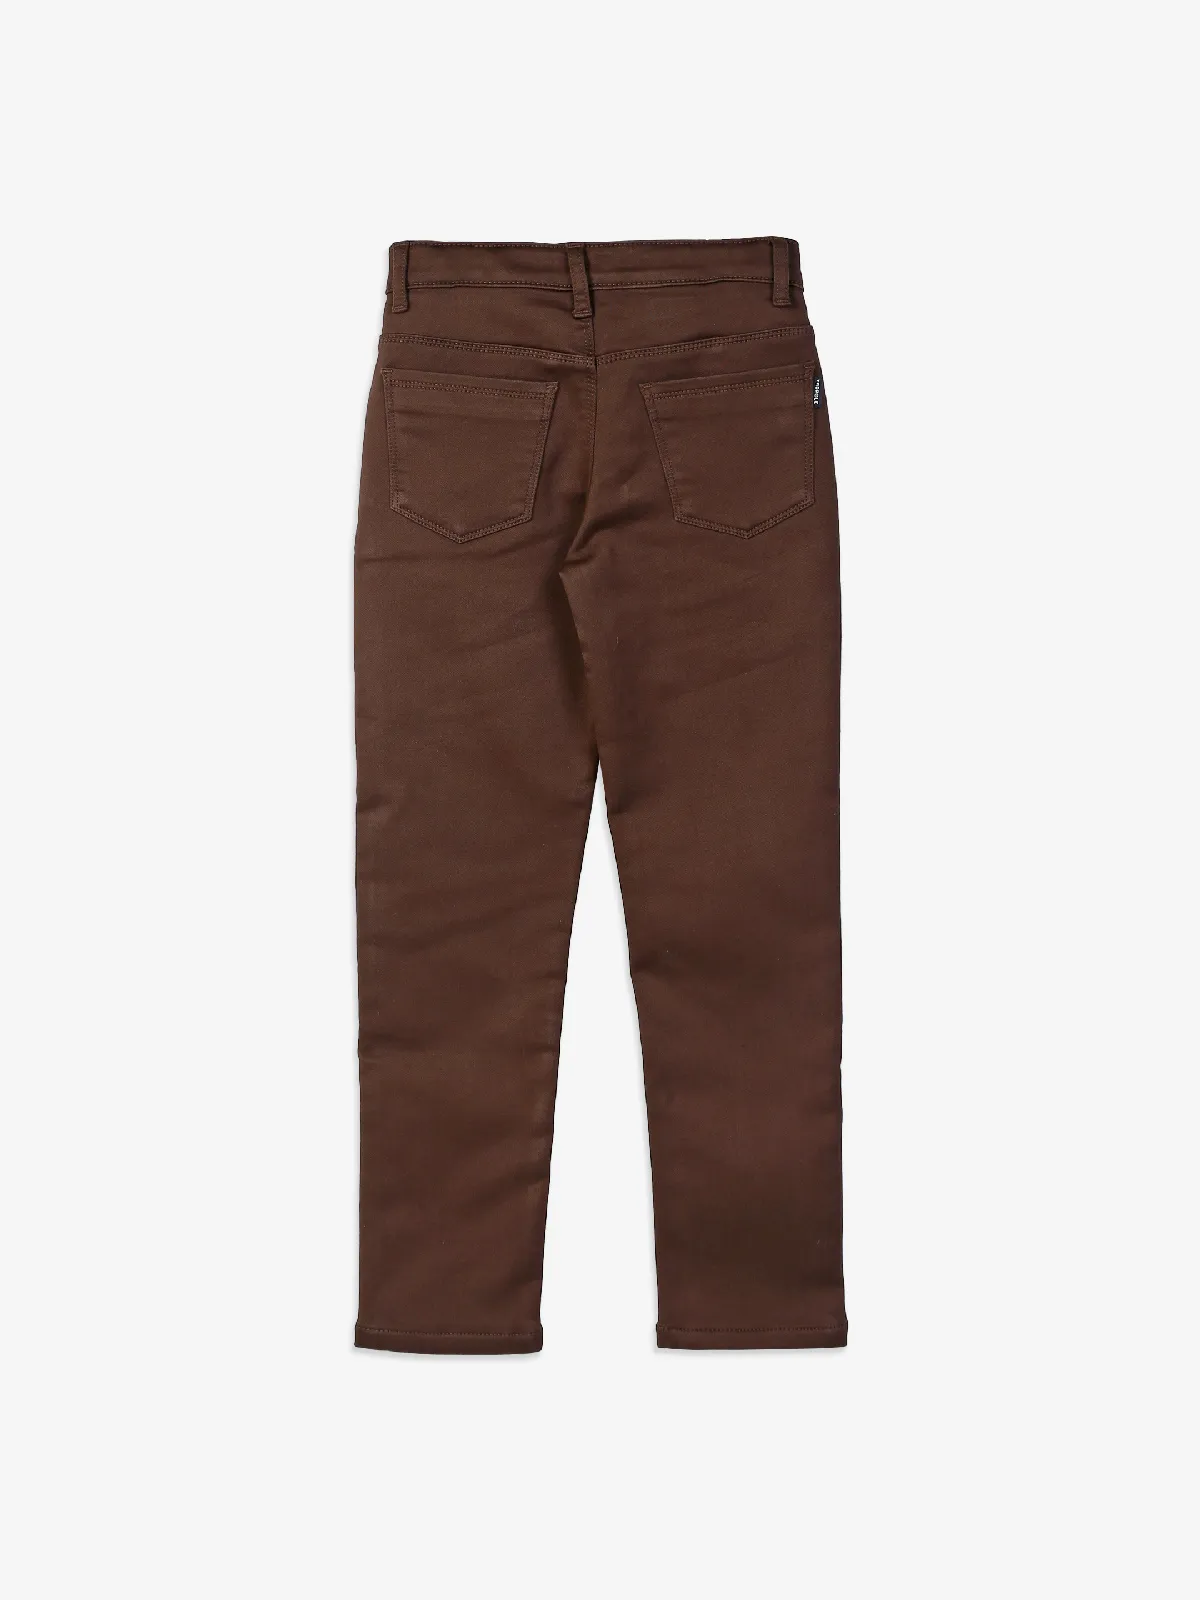 Tadpole slim fit brown jeans